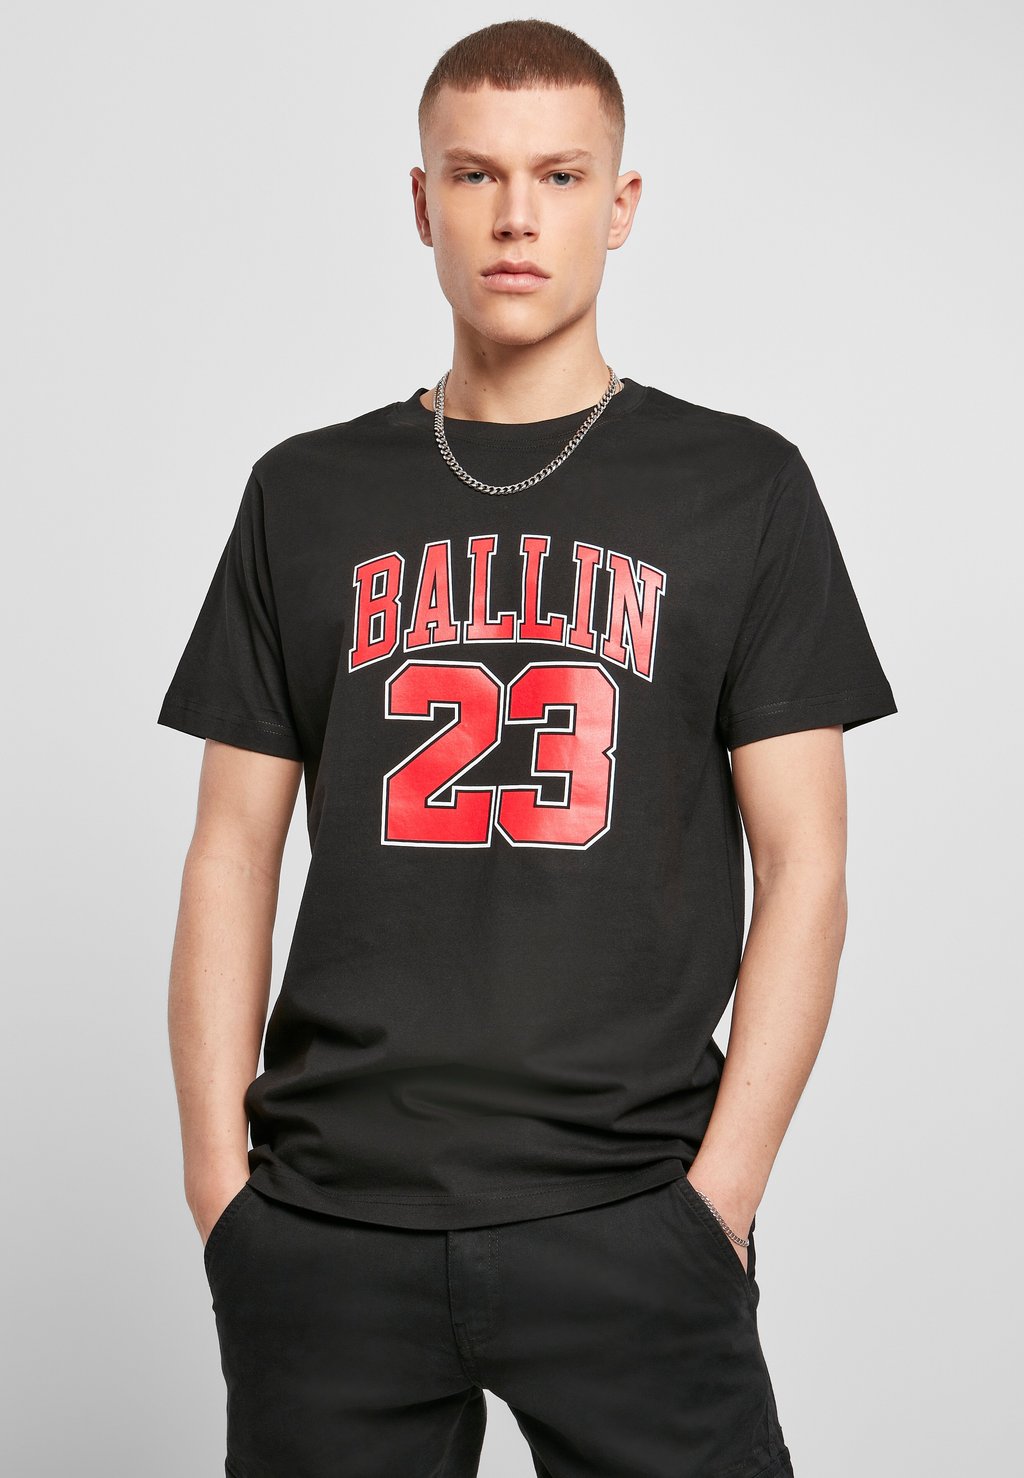 Mr 23. Ballin футболка.